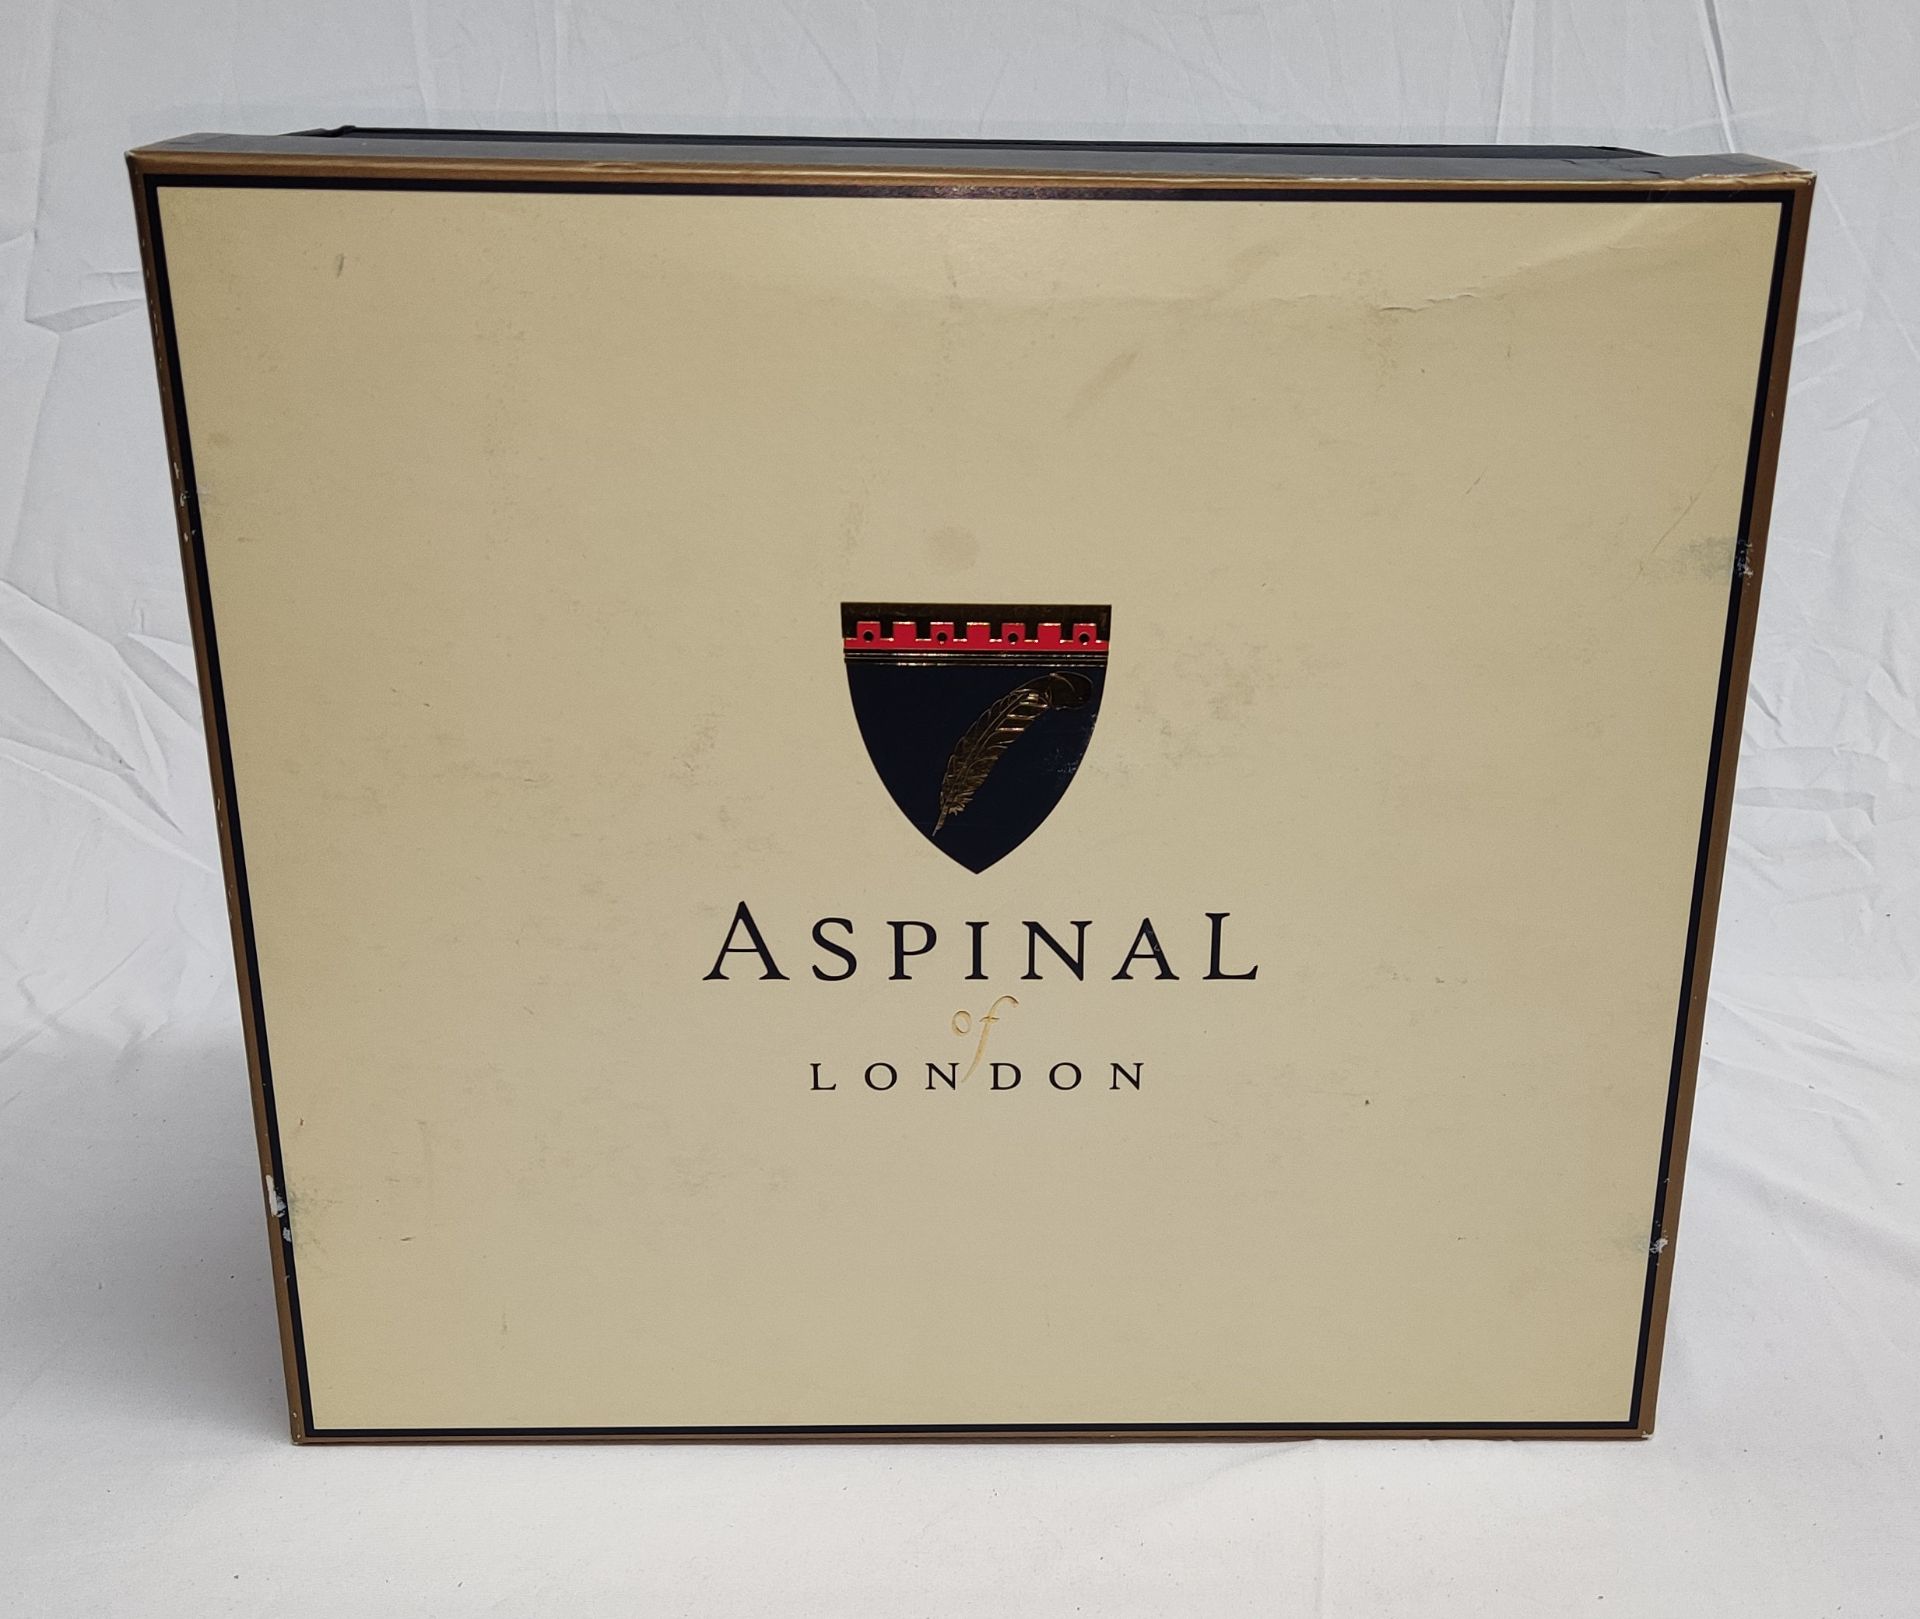 1 x ASPINAL OF LONDON Mayfair Bag - Evergreen Patent Croc - Original RRP £695.00 - Image 8 of 23